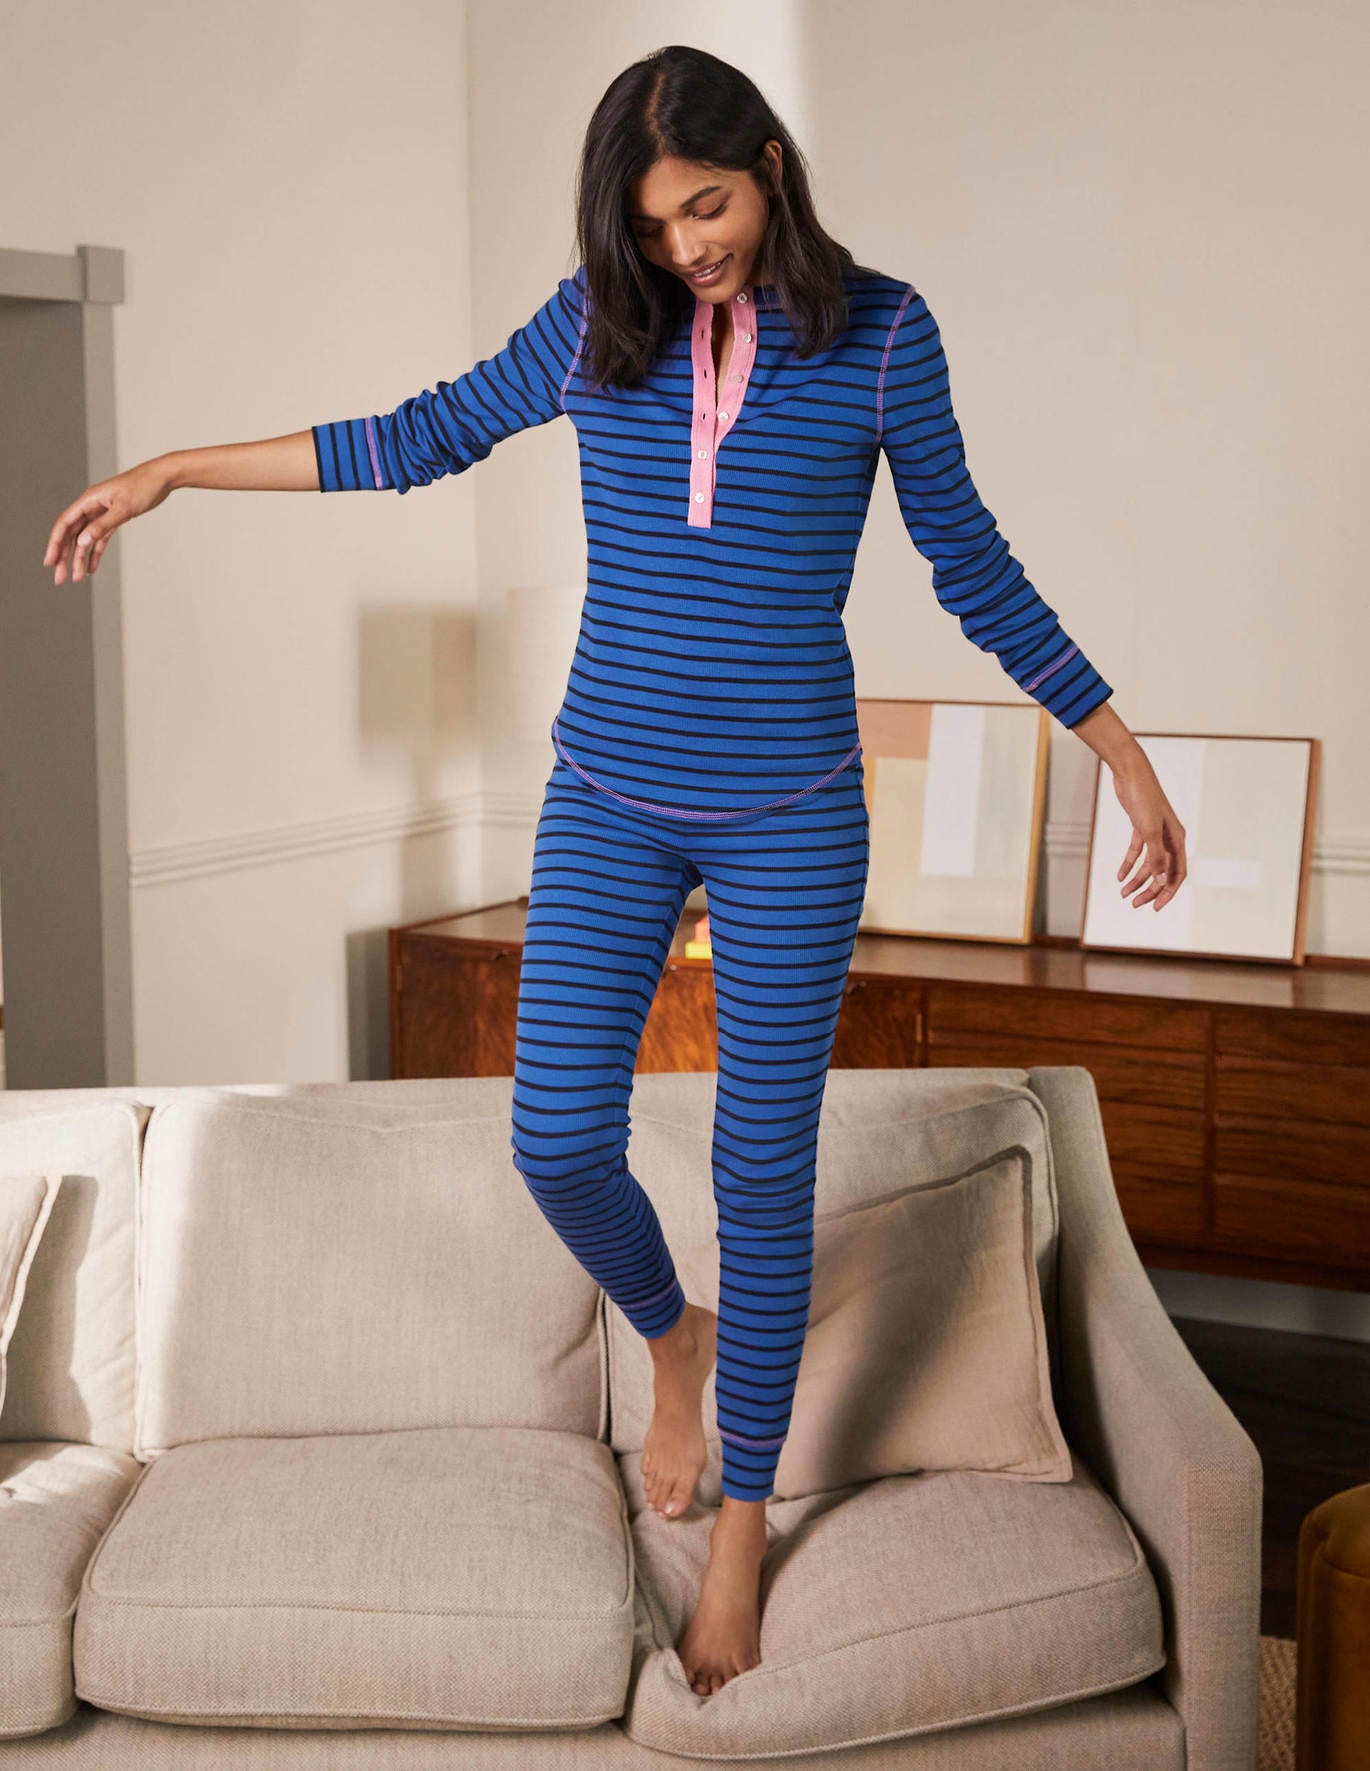 Boden Ribbed Pajama Leggings - Porcelain Blue and Navy Stripe